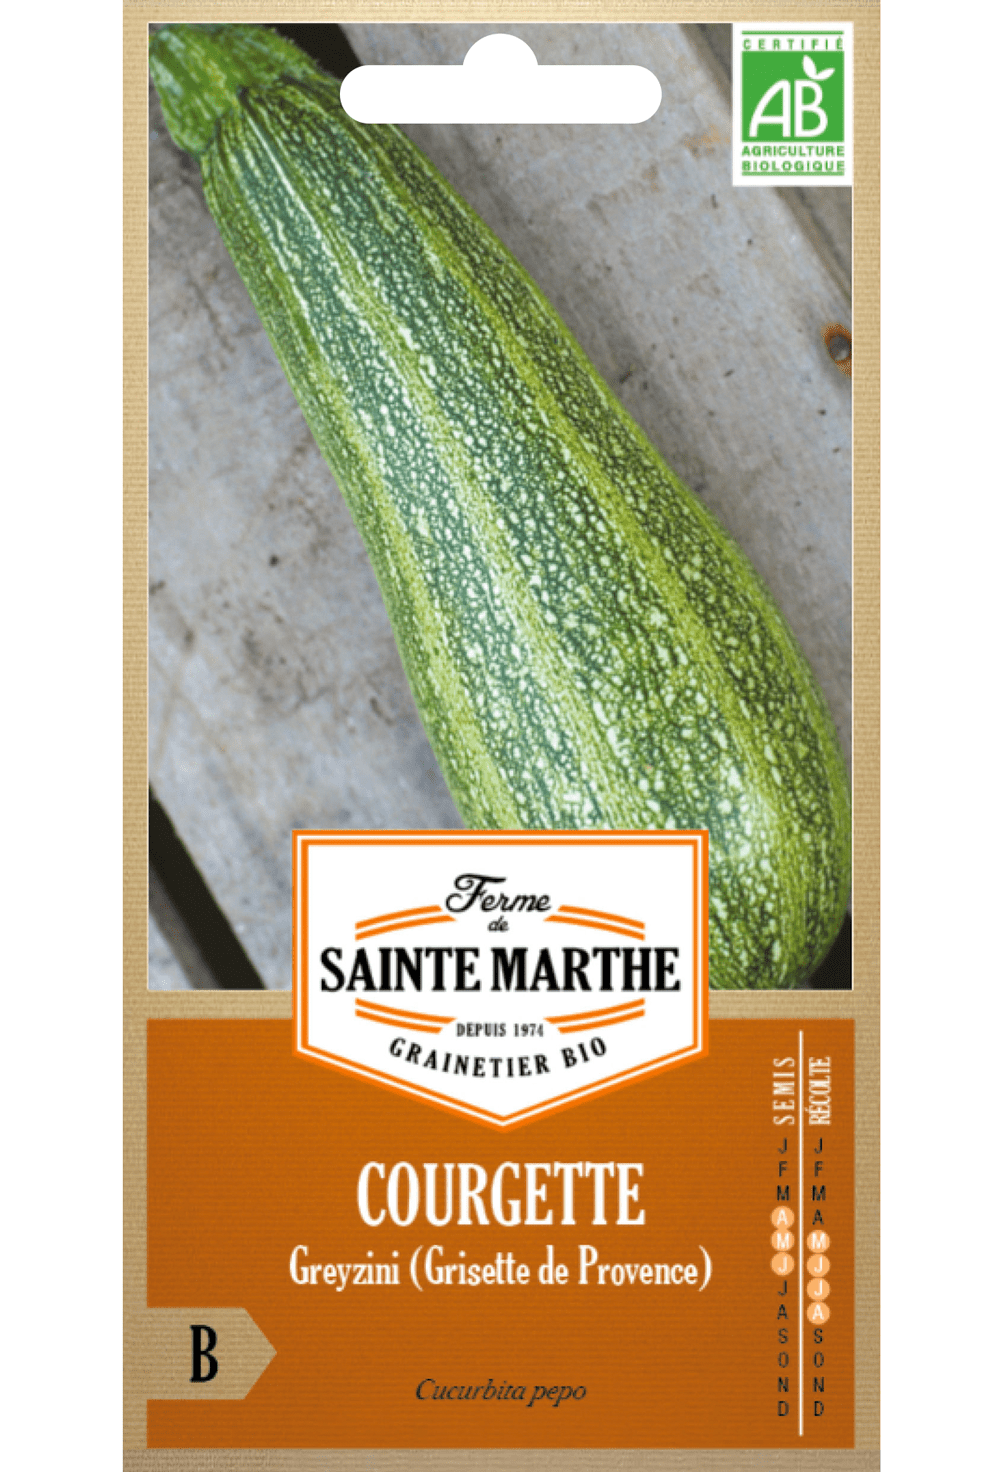 Courgette Greyzini (Grisette de Provence)